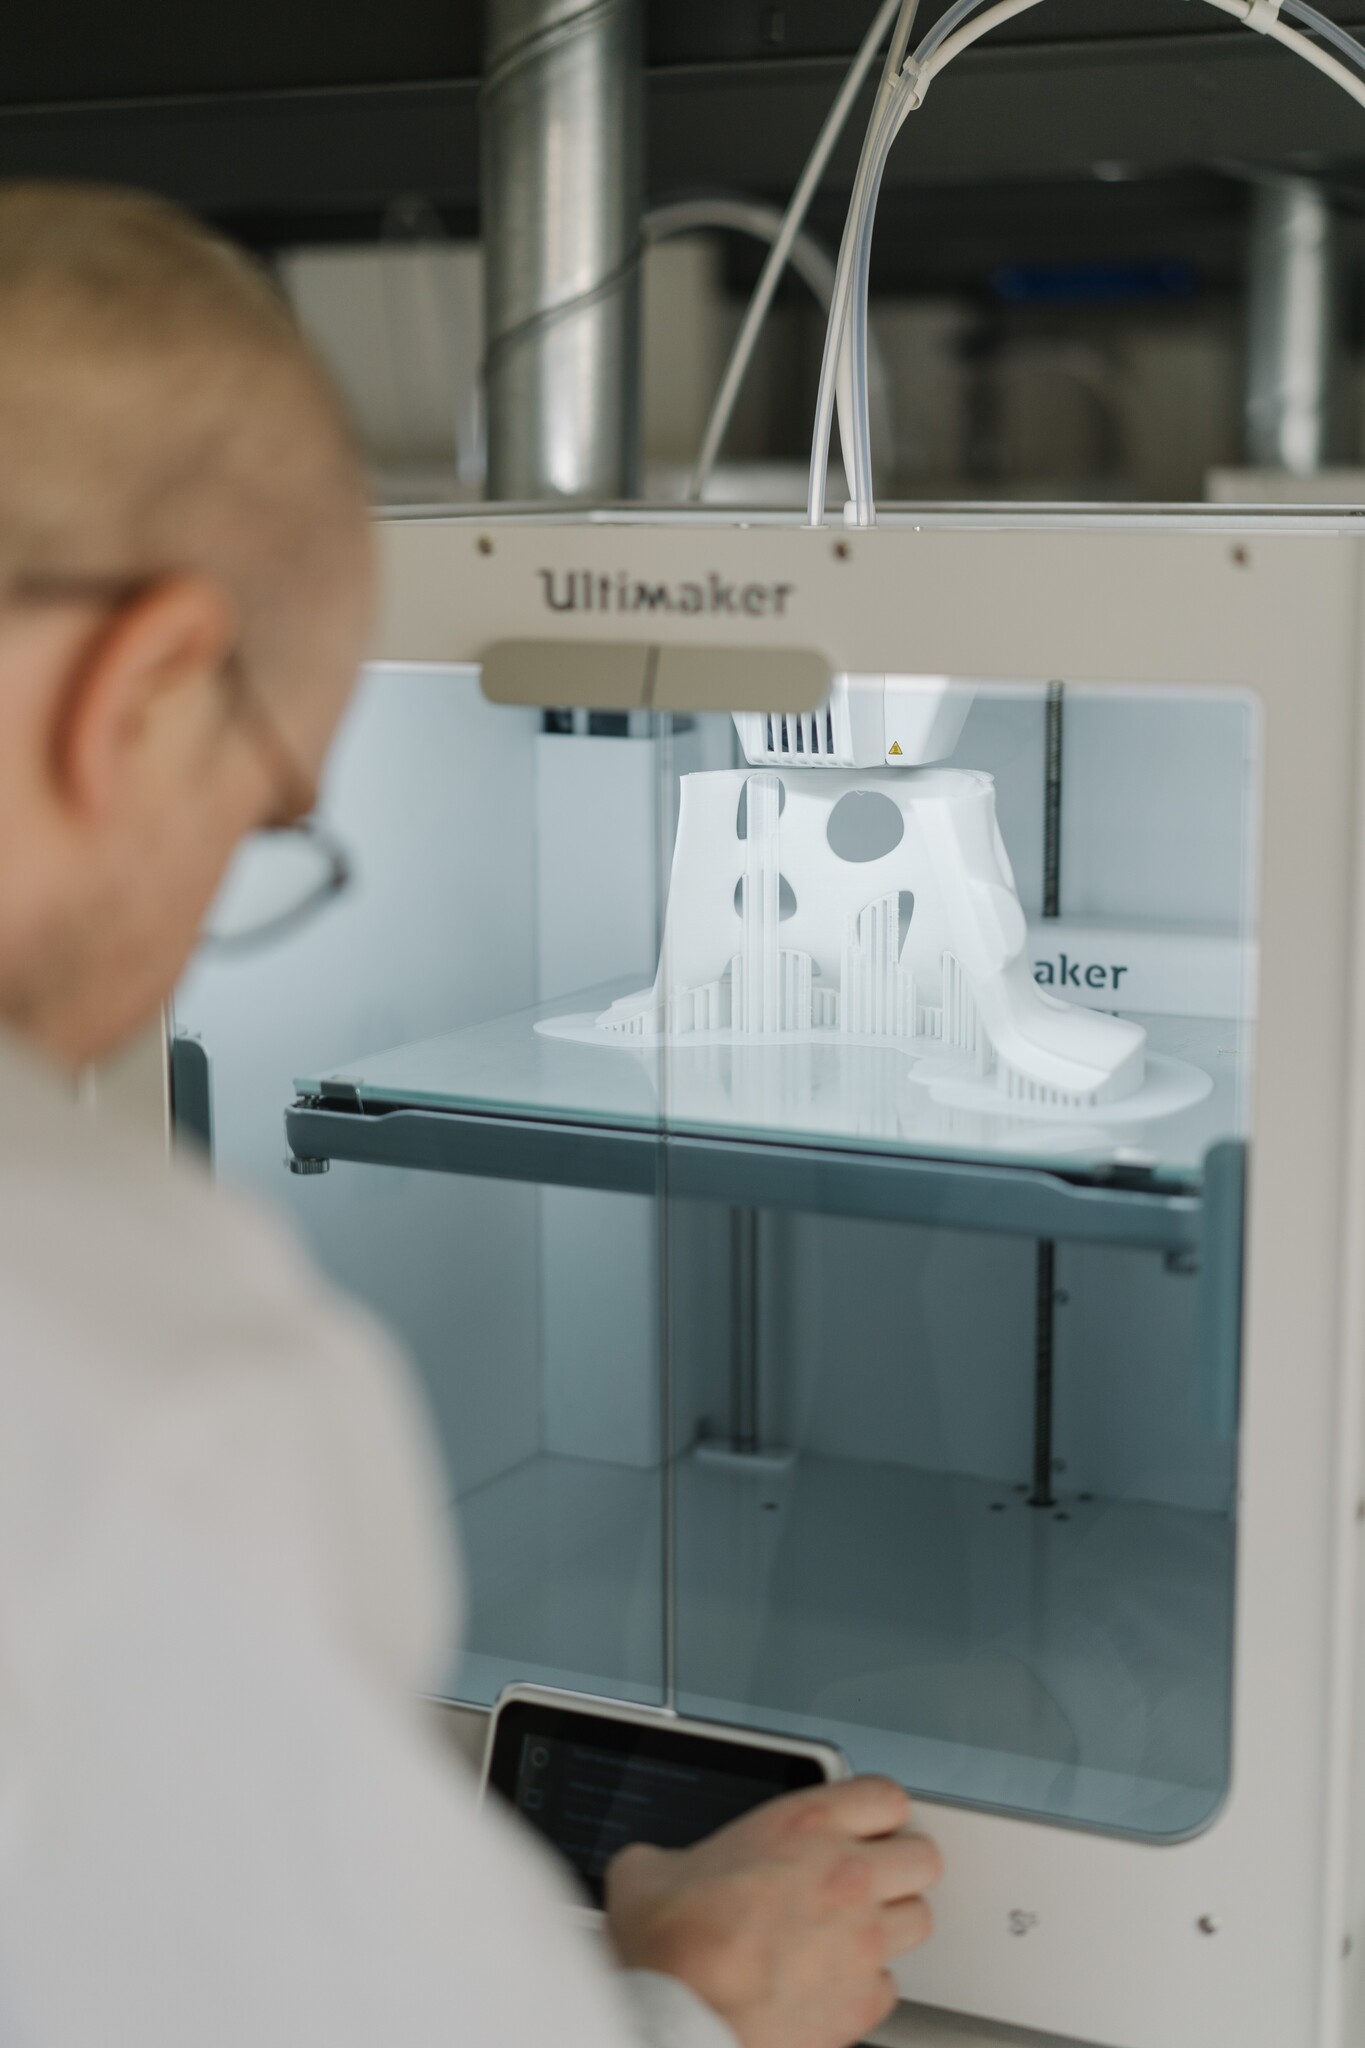 Hoeveel kan je printen met 1 kg filament?